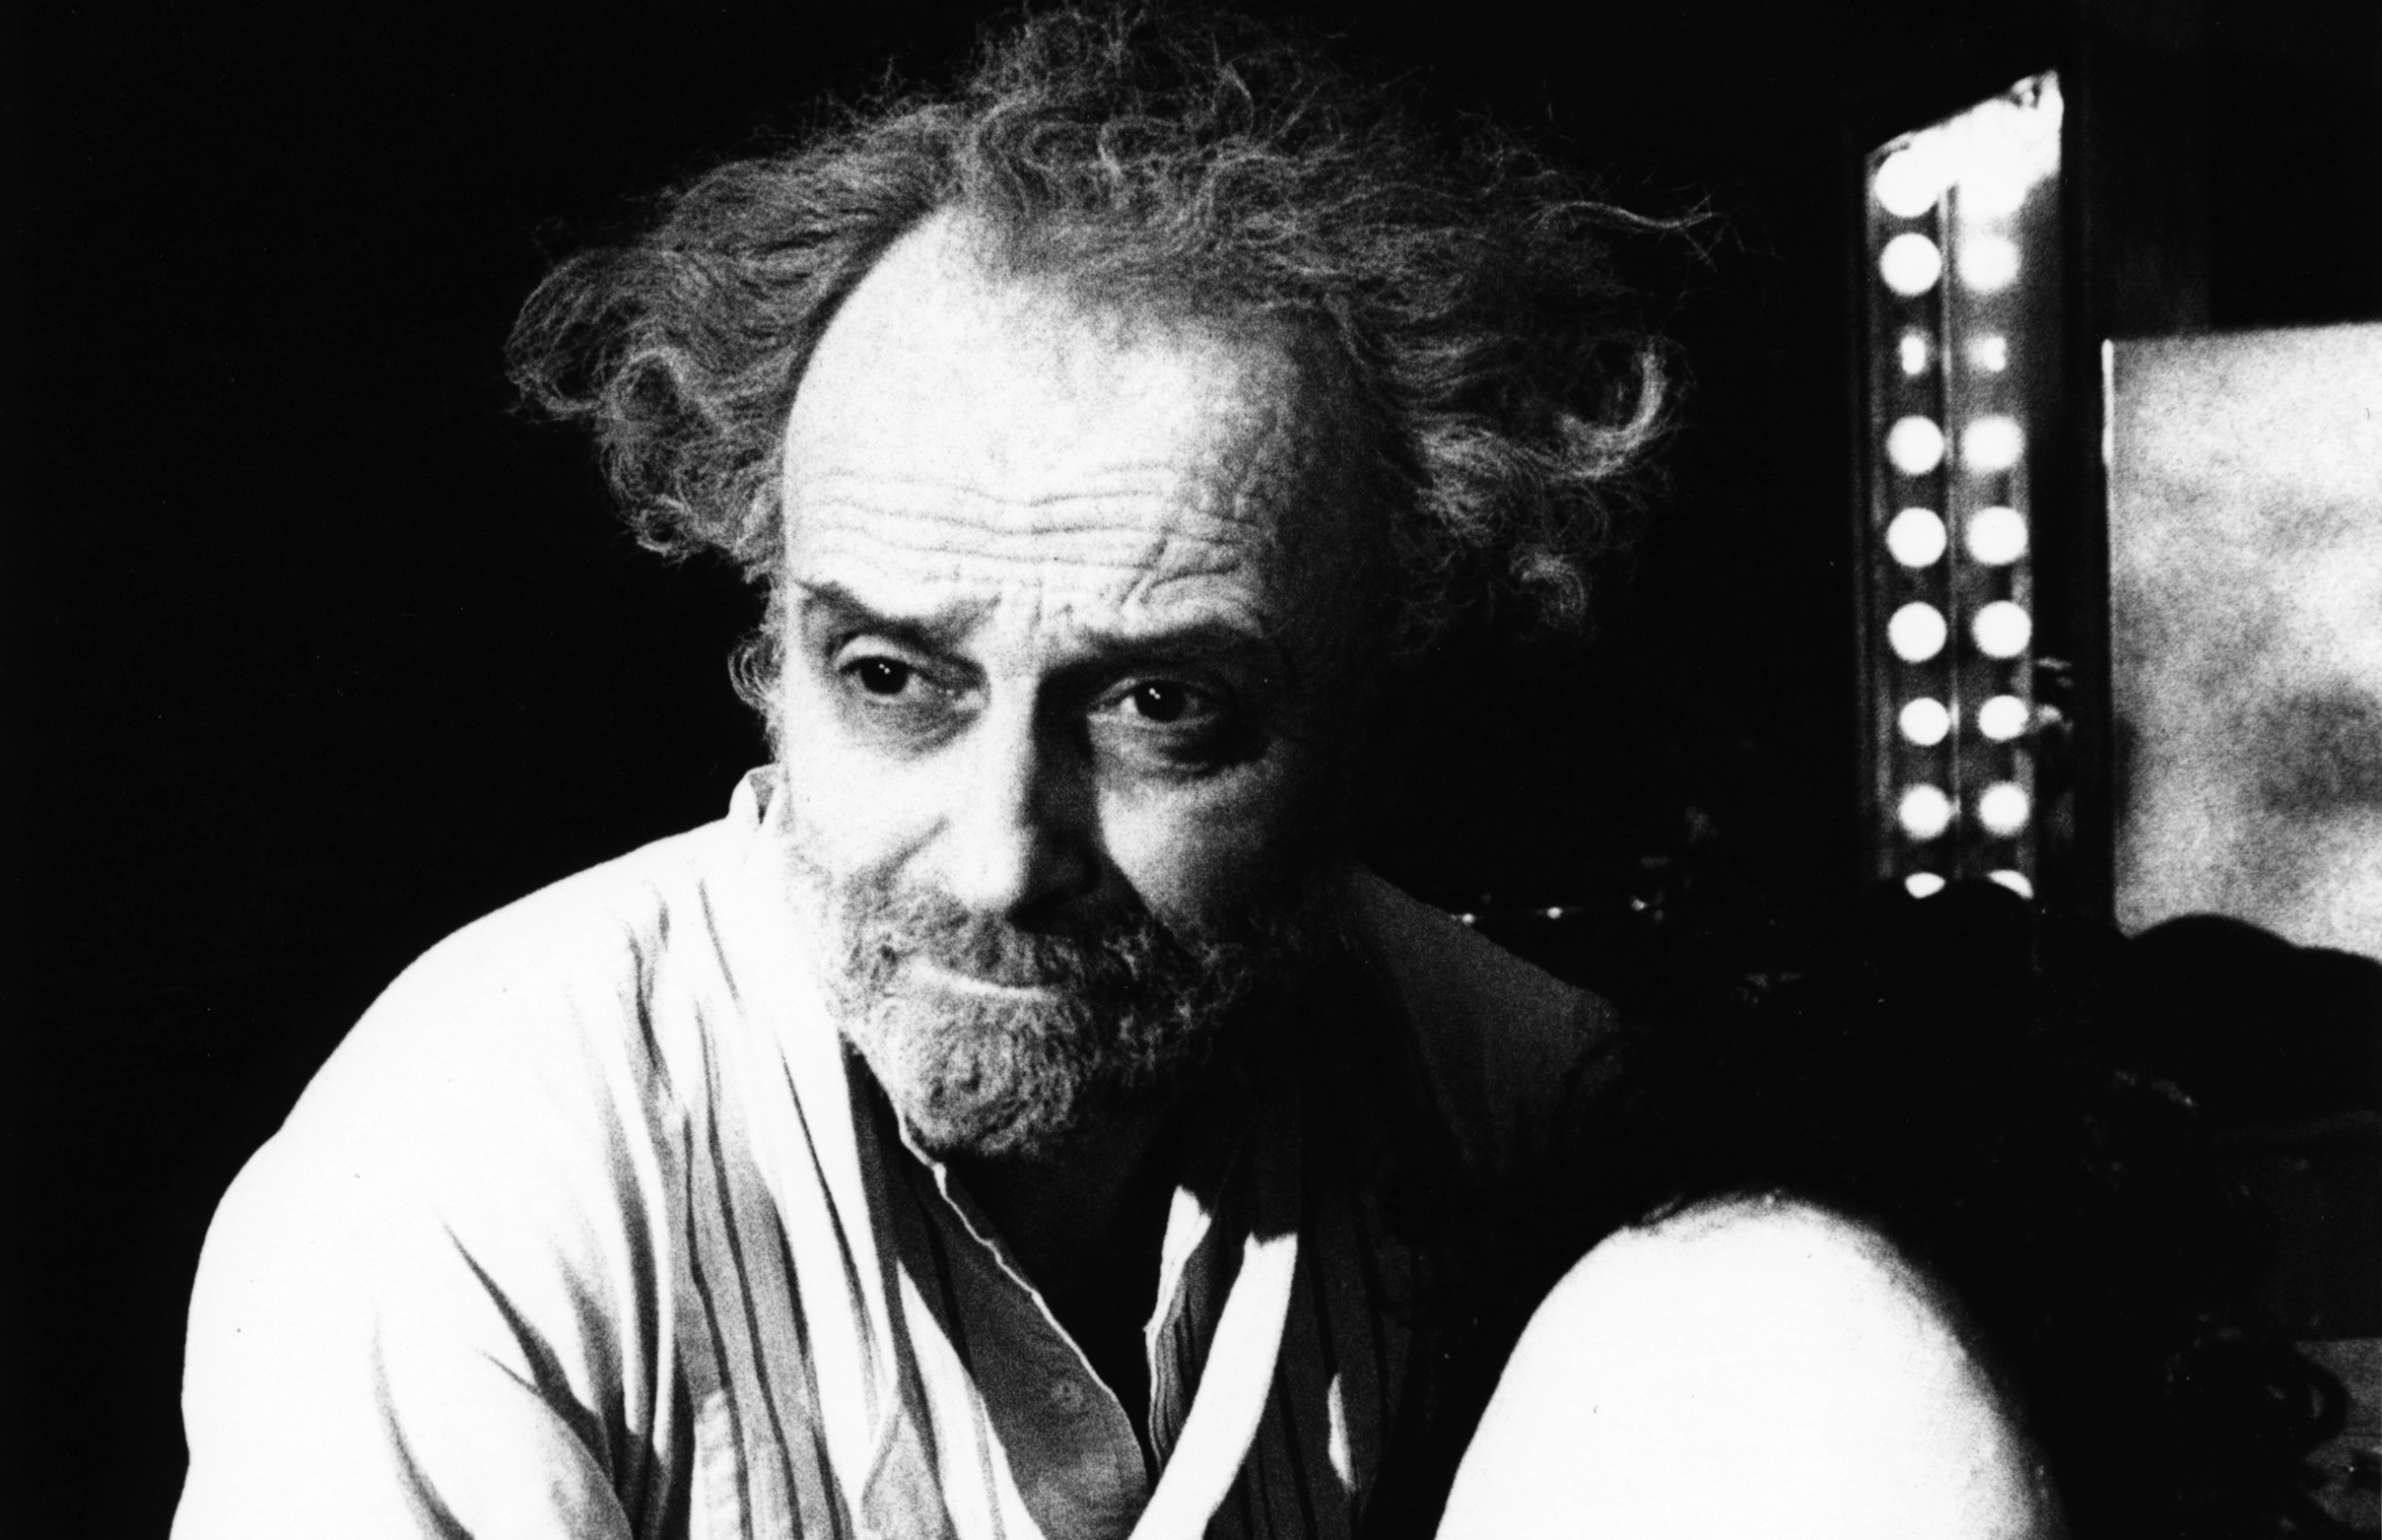 Roberto Cilli 1987 als Schauspieler in „Der kroatische Faust”